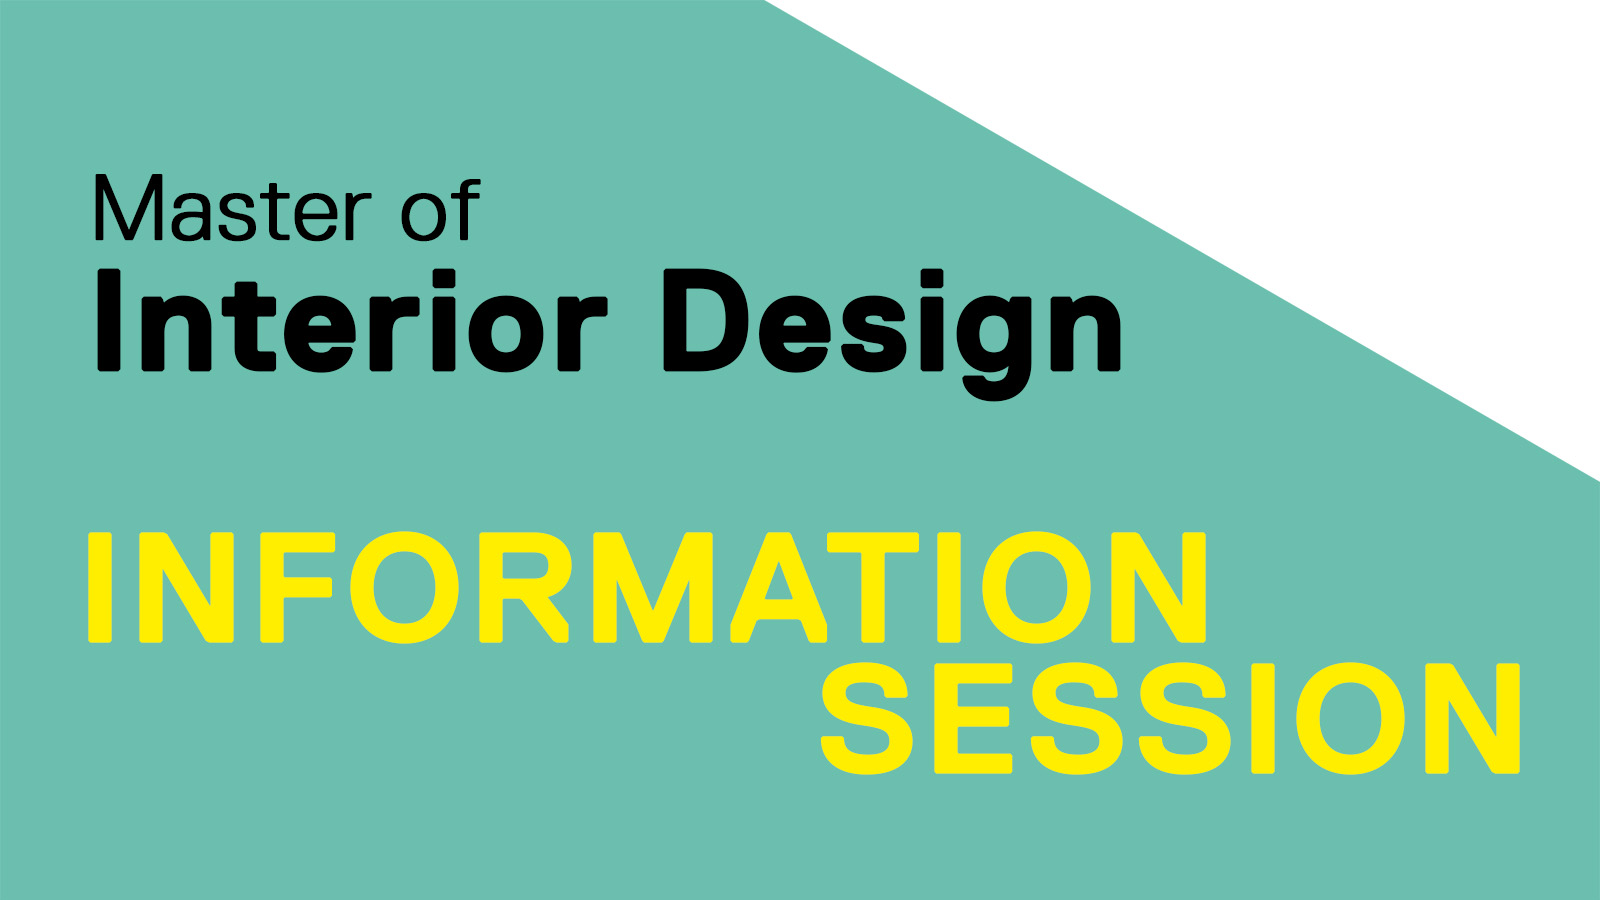 Master of Interior Design Information Session